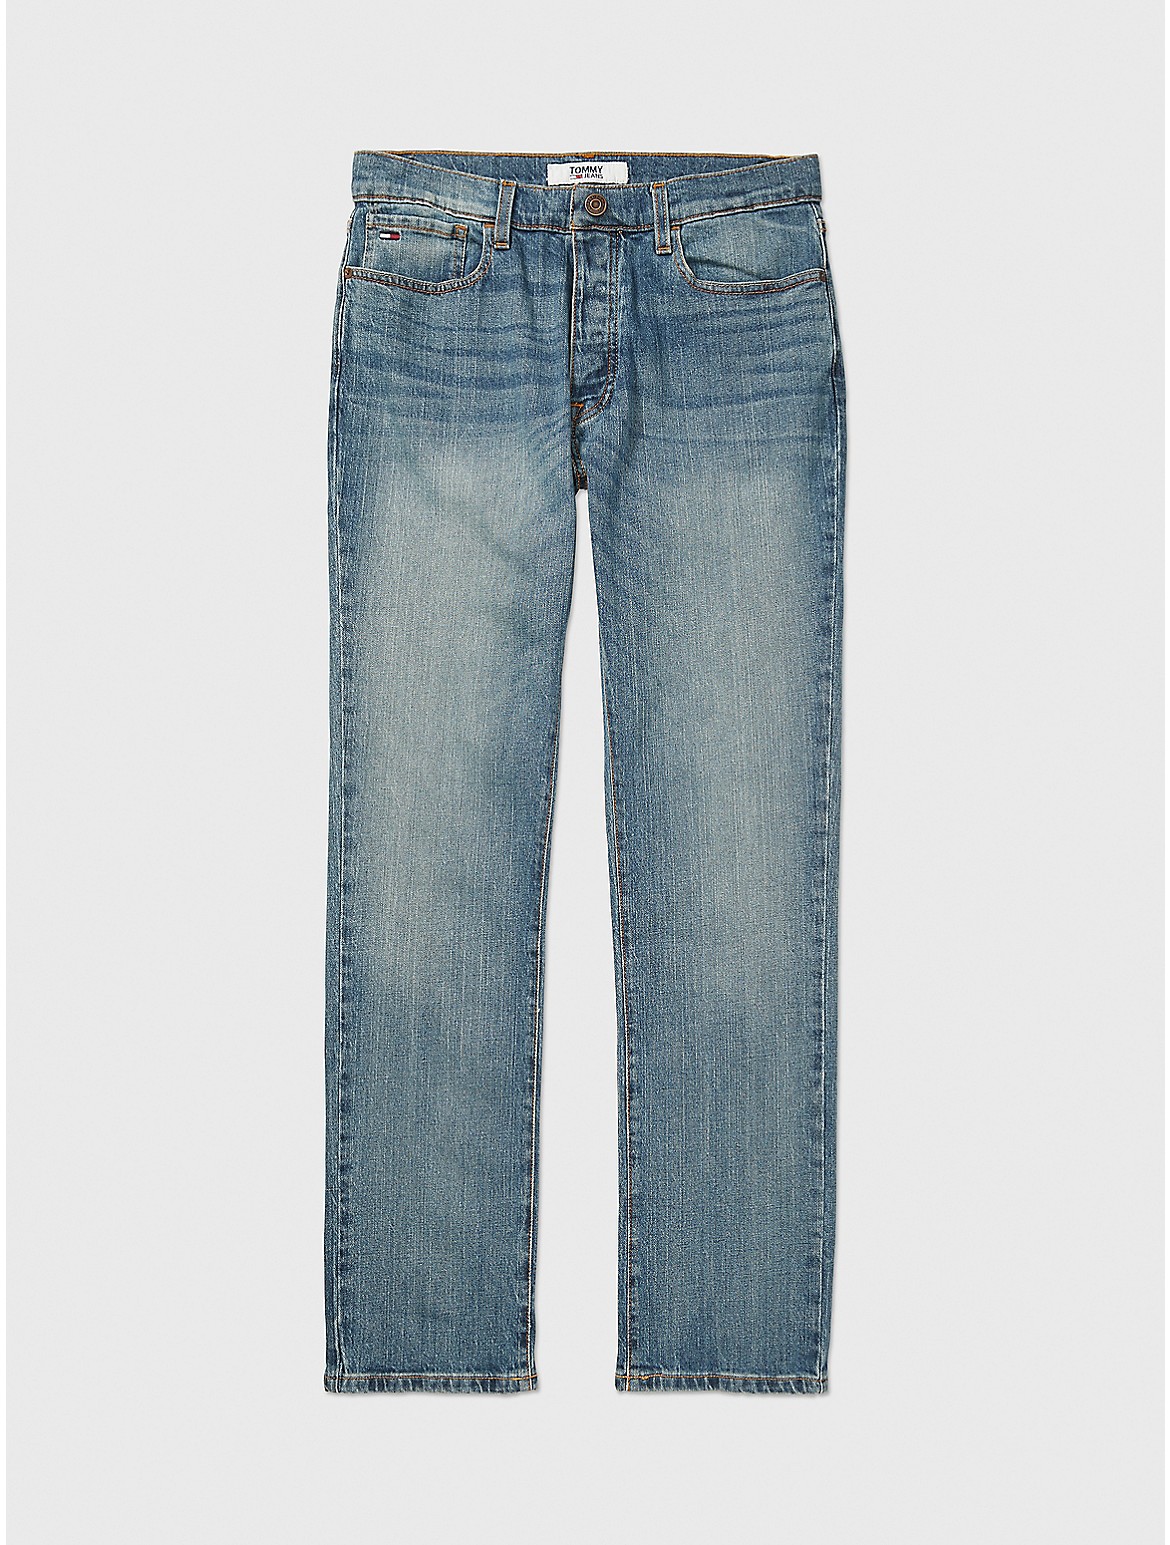 Tommy Hilfiger Men's Straight Fit Jean